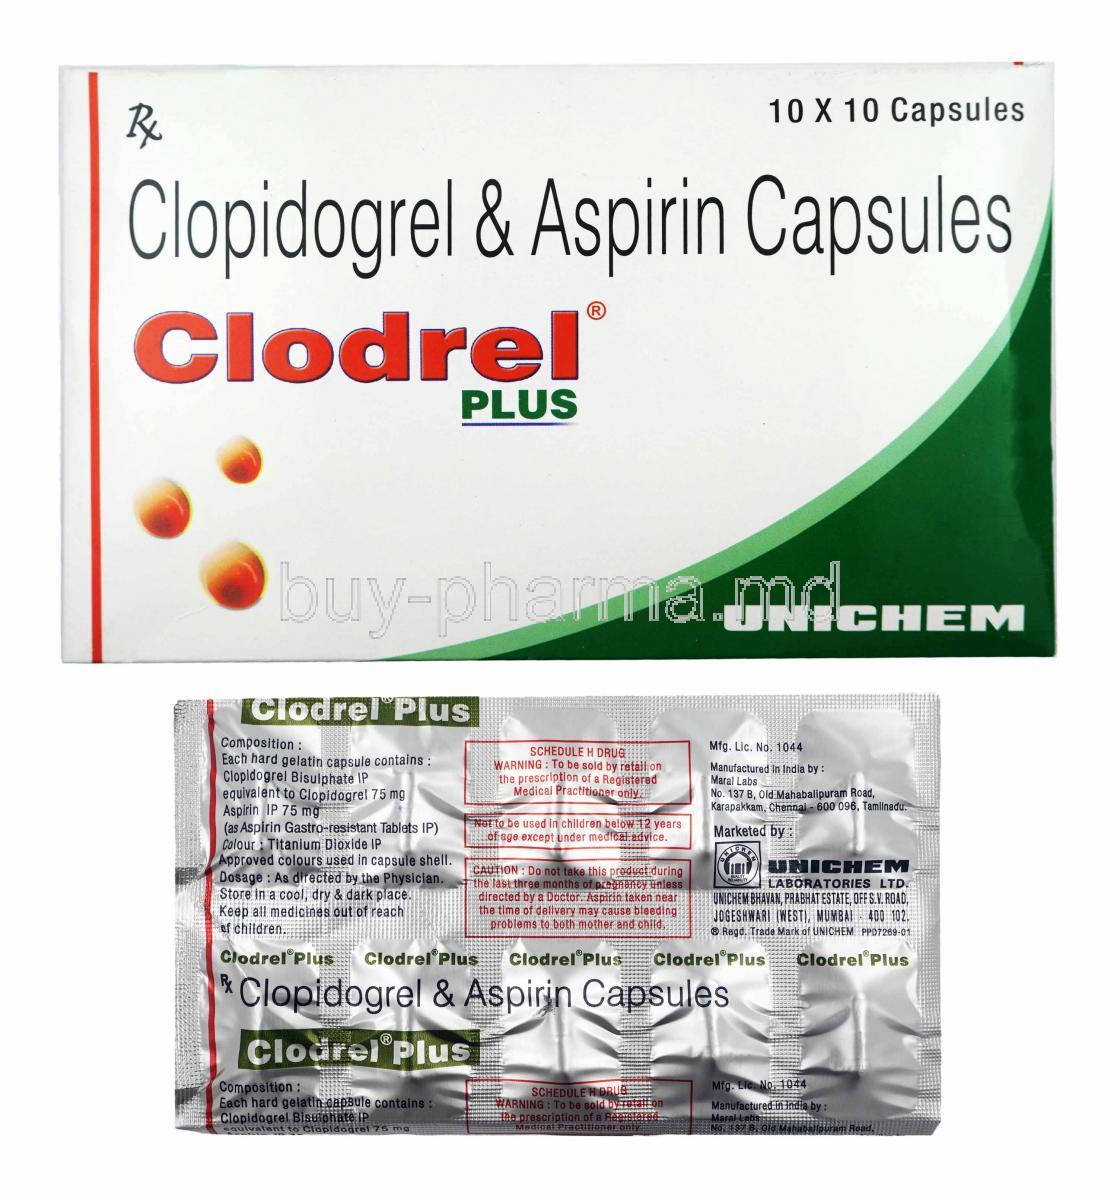 Clodrel Plus, Aspirin 75mg and Clopidogrel box and capsules